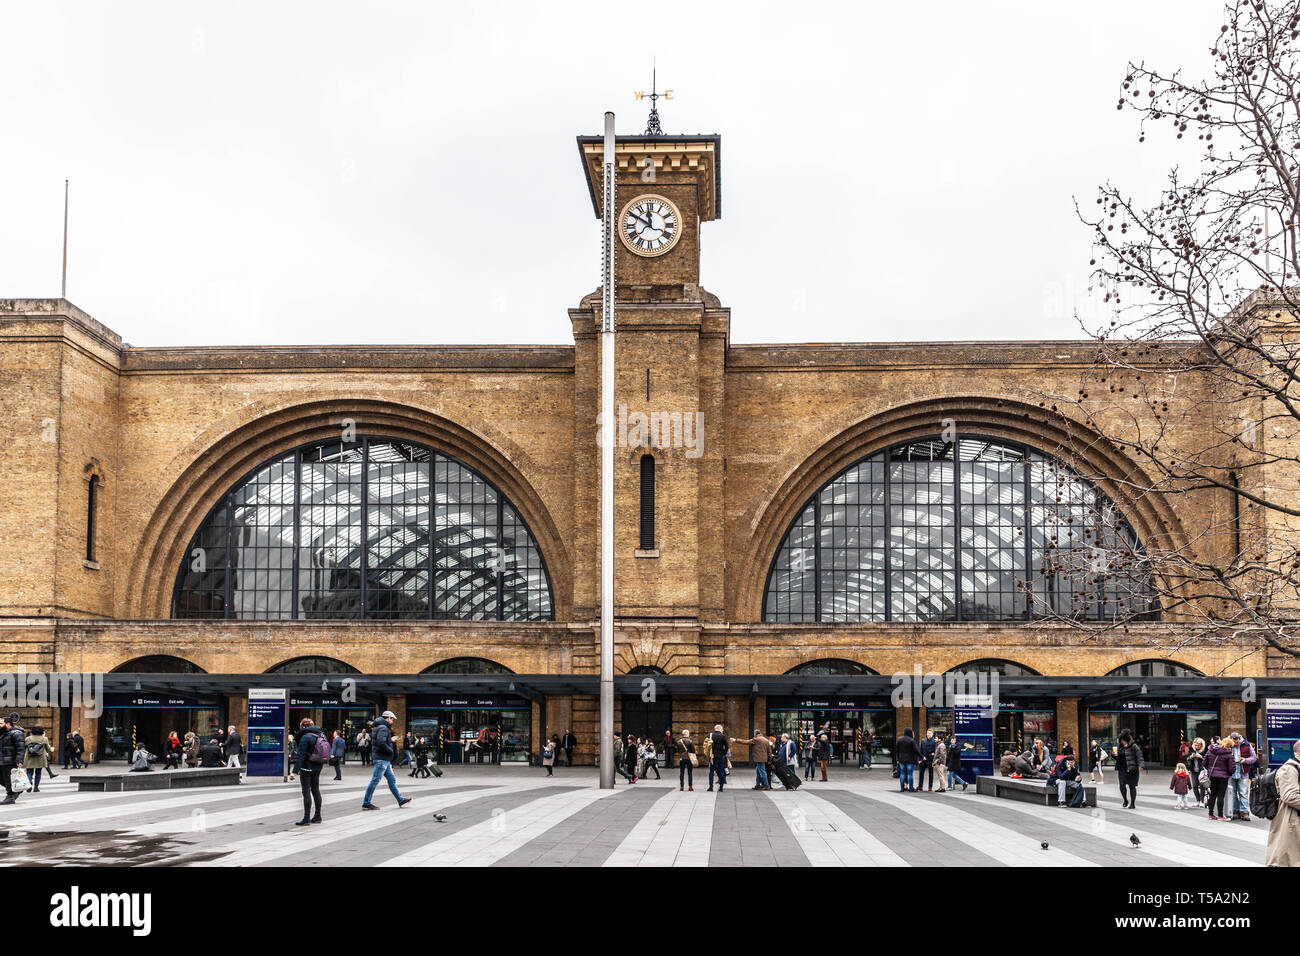 King's Cross Railway Station, Euston Road, London, England, UK. Stock Photo